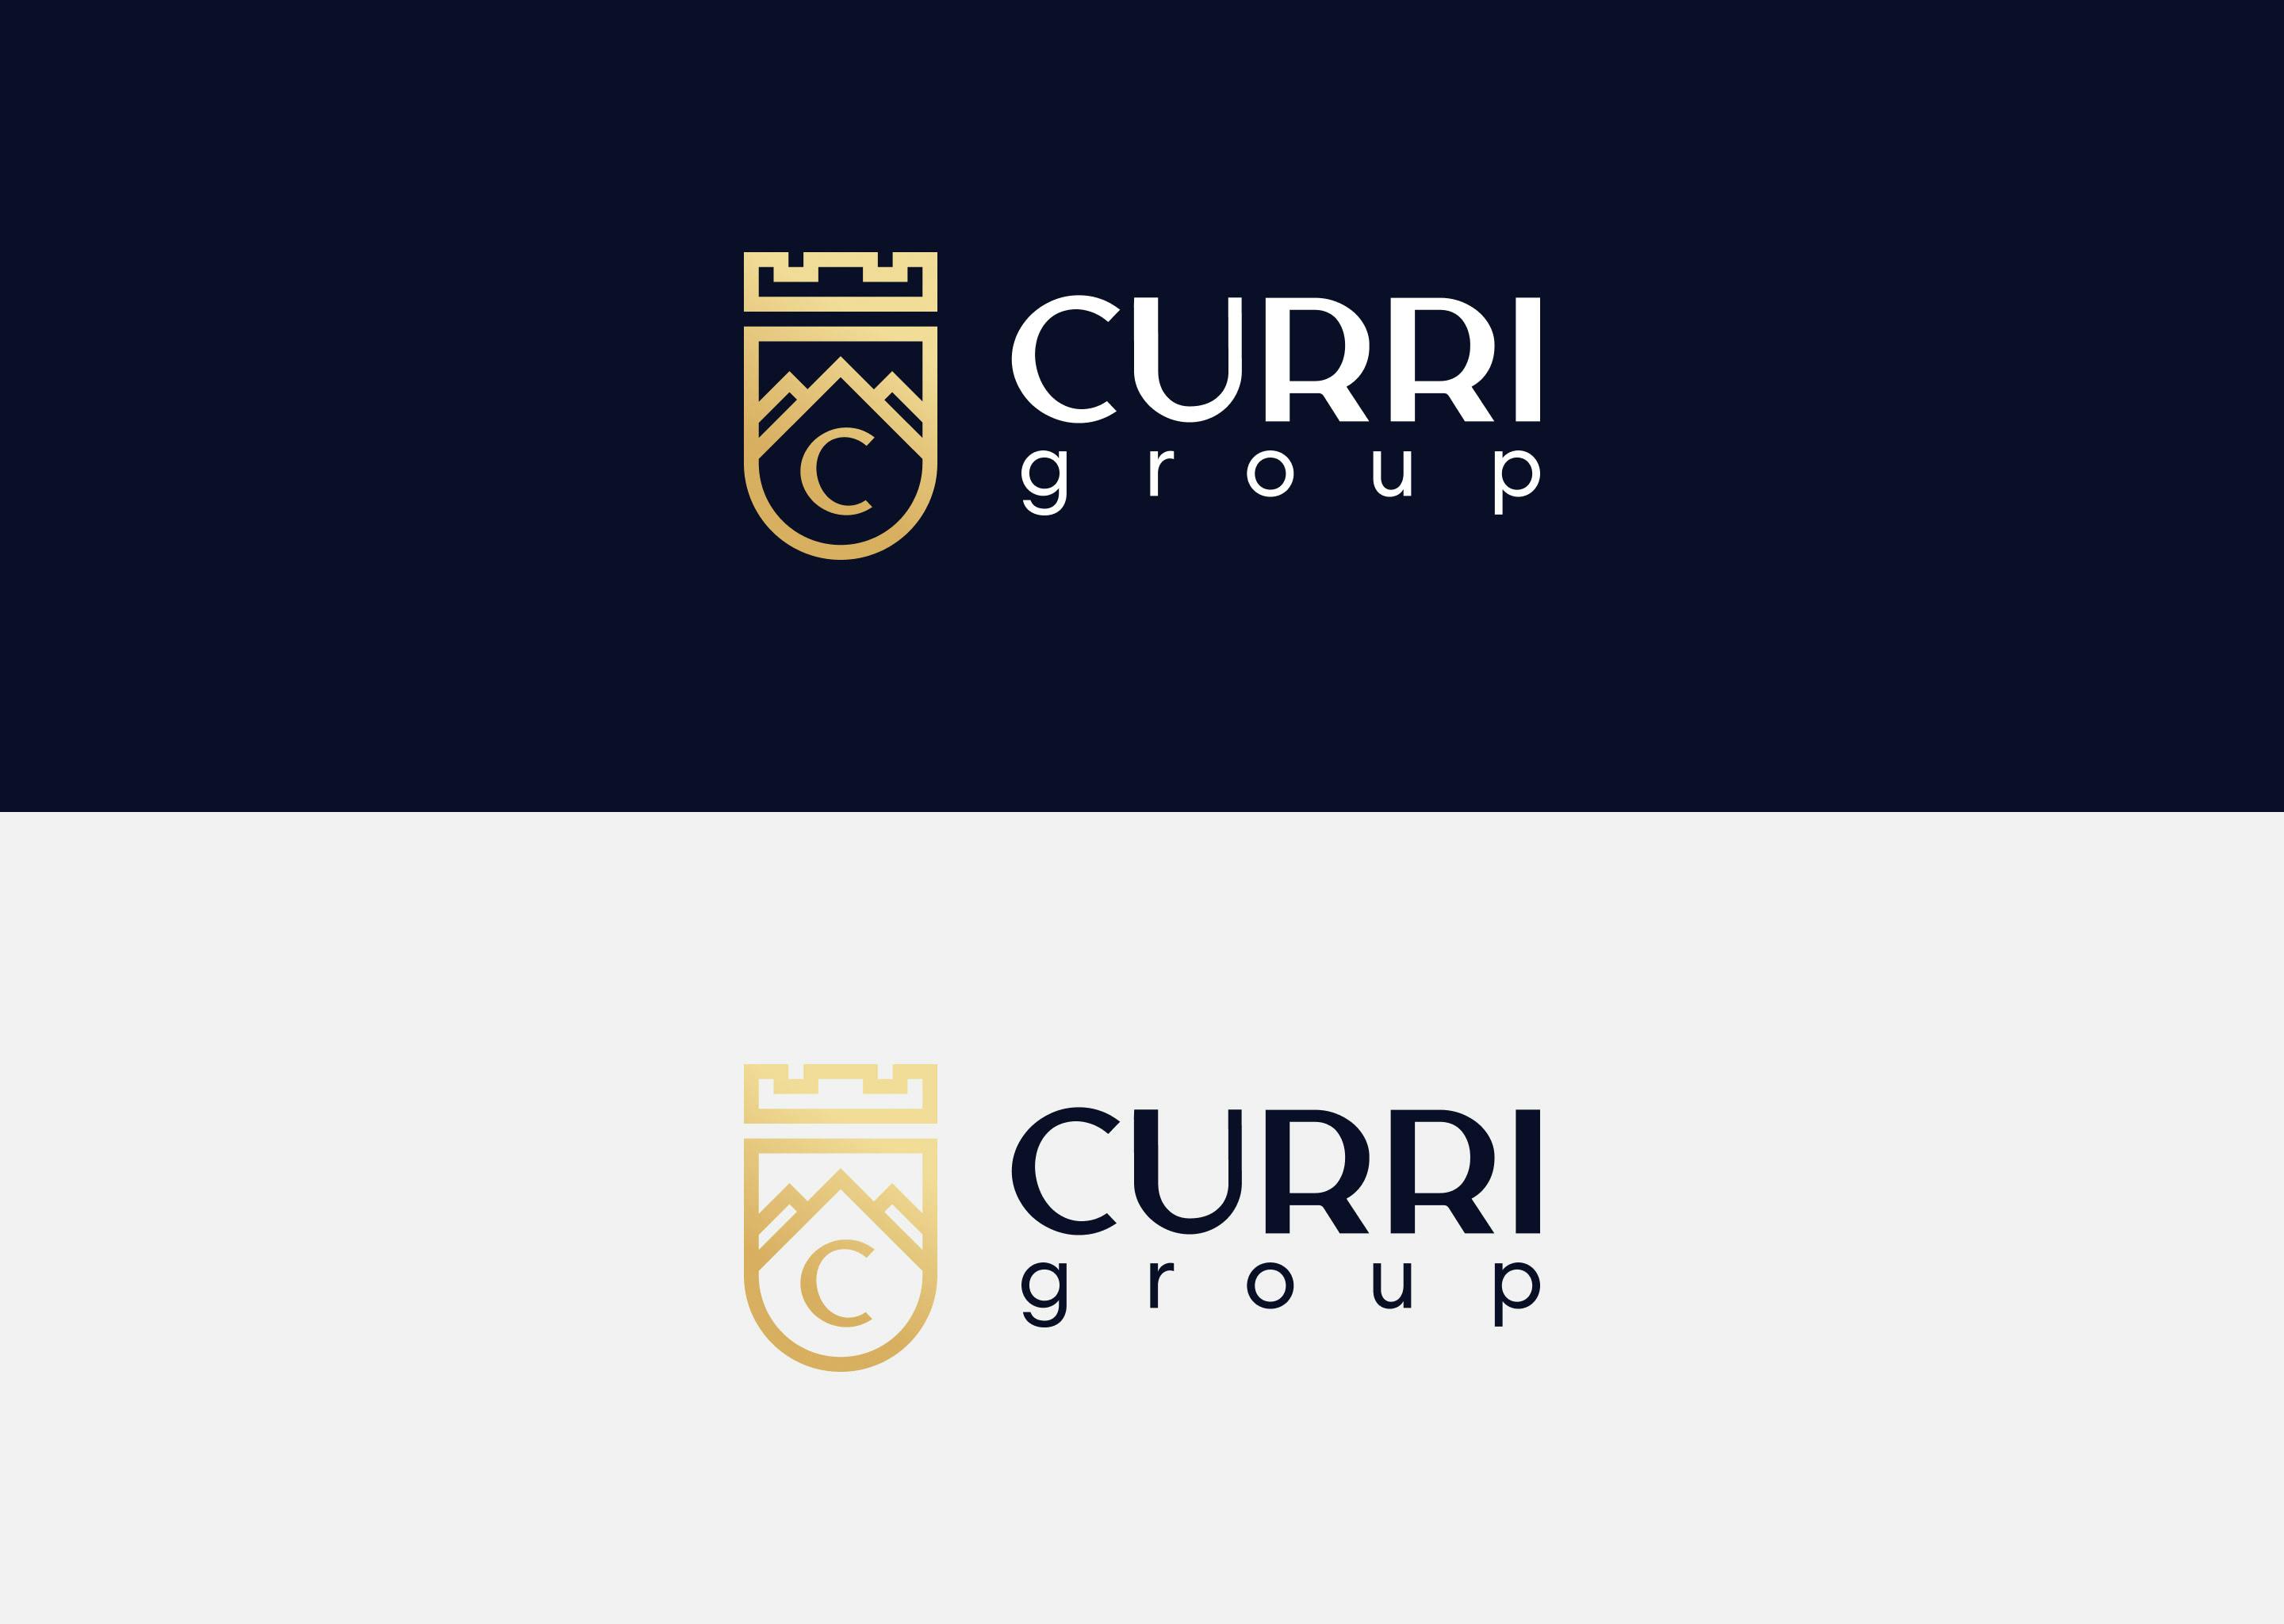 Curri Group